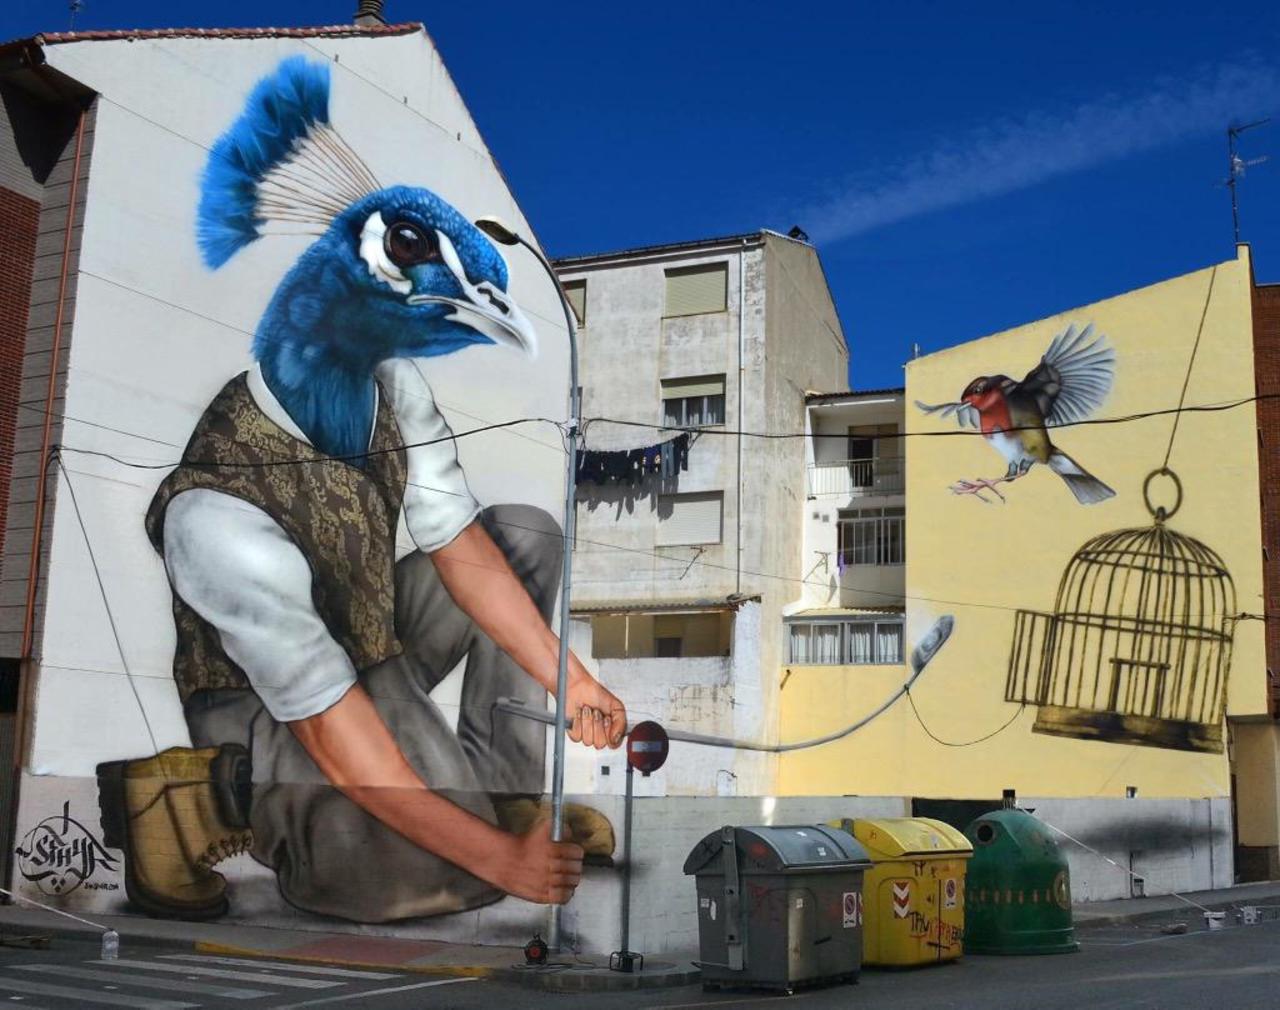 RT @StreetArt_CdMx: Muy bueno el mural de @sfhir 

#HombrePajaro #streetart #Stencil #Graffiti #calligraphy http://t.co/3TN9wOFHxc